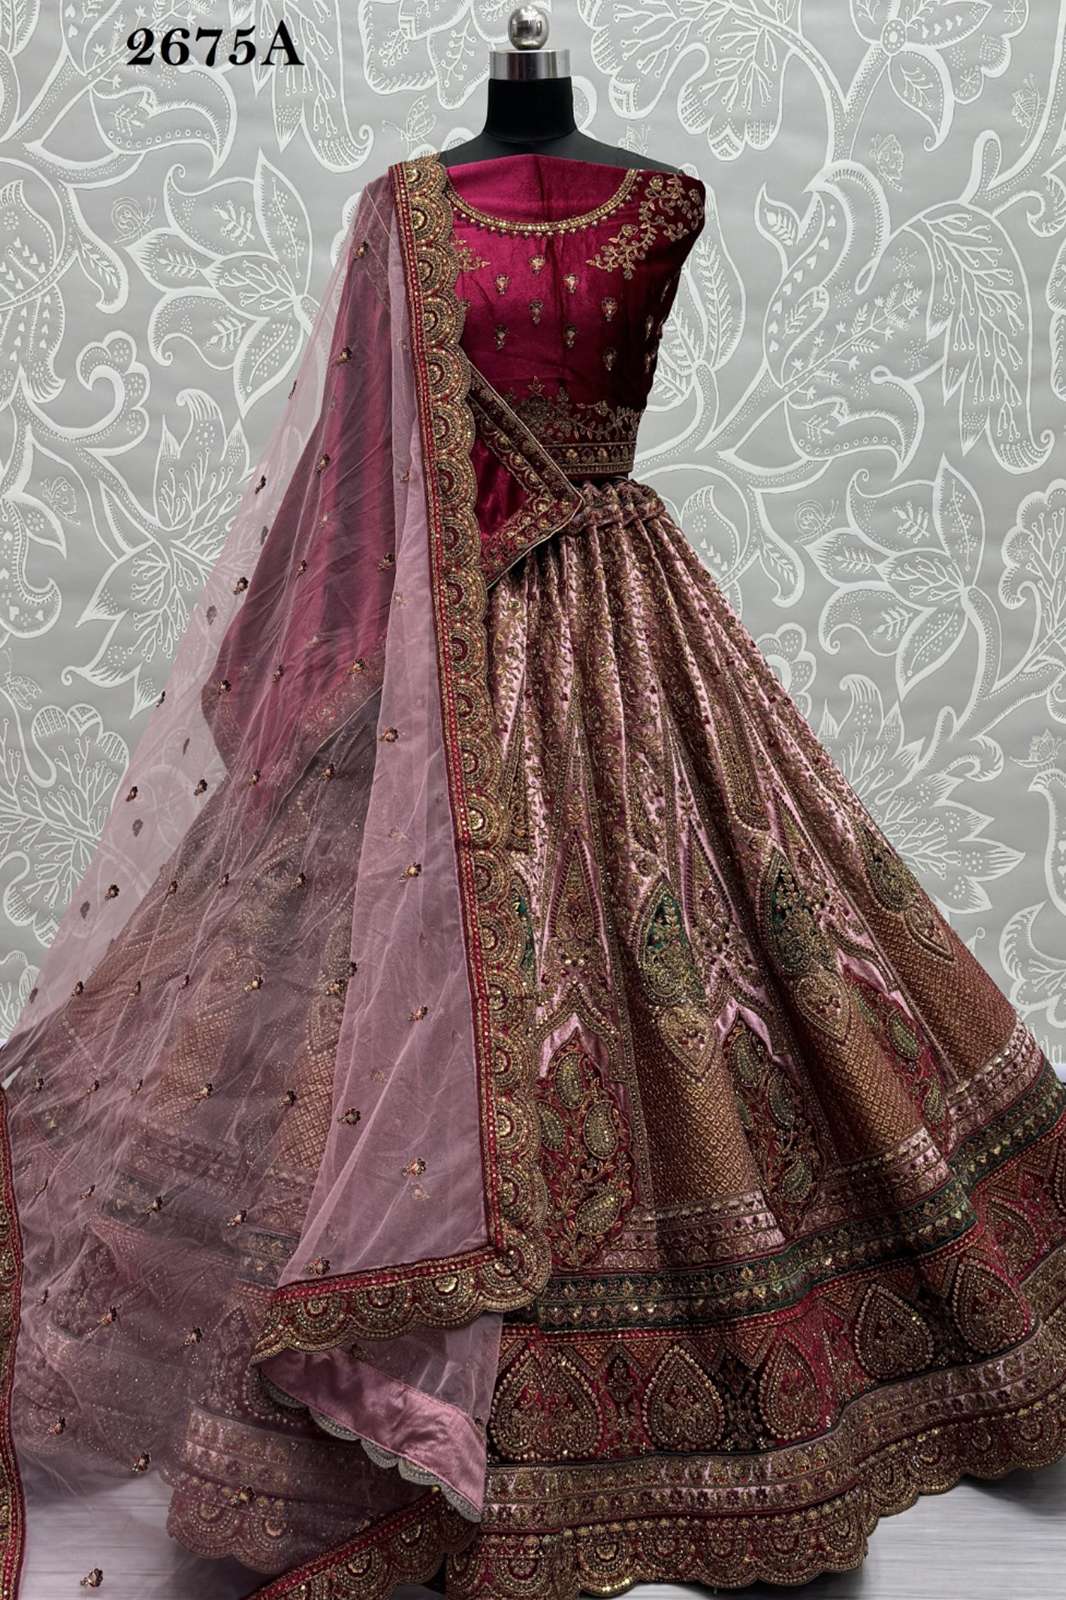 ANJANI ART 6132 2675A TO 2675D Indian Designer Bridal Velvet Legenga Choli 